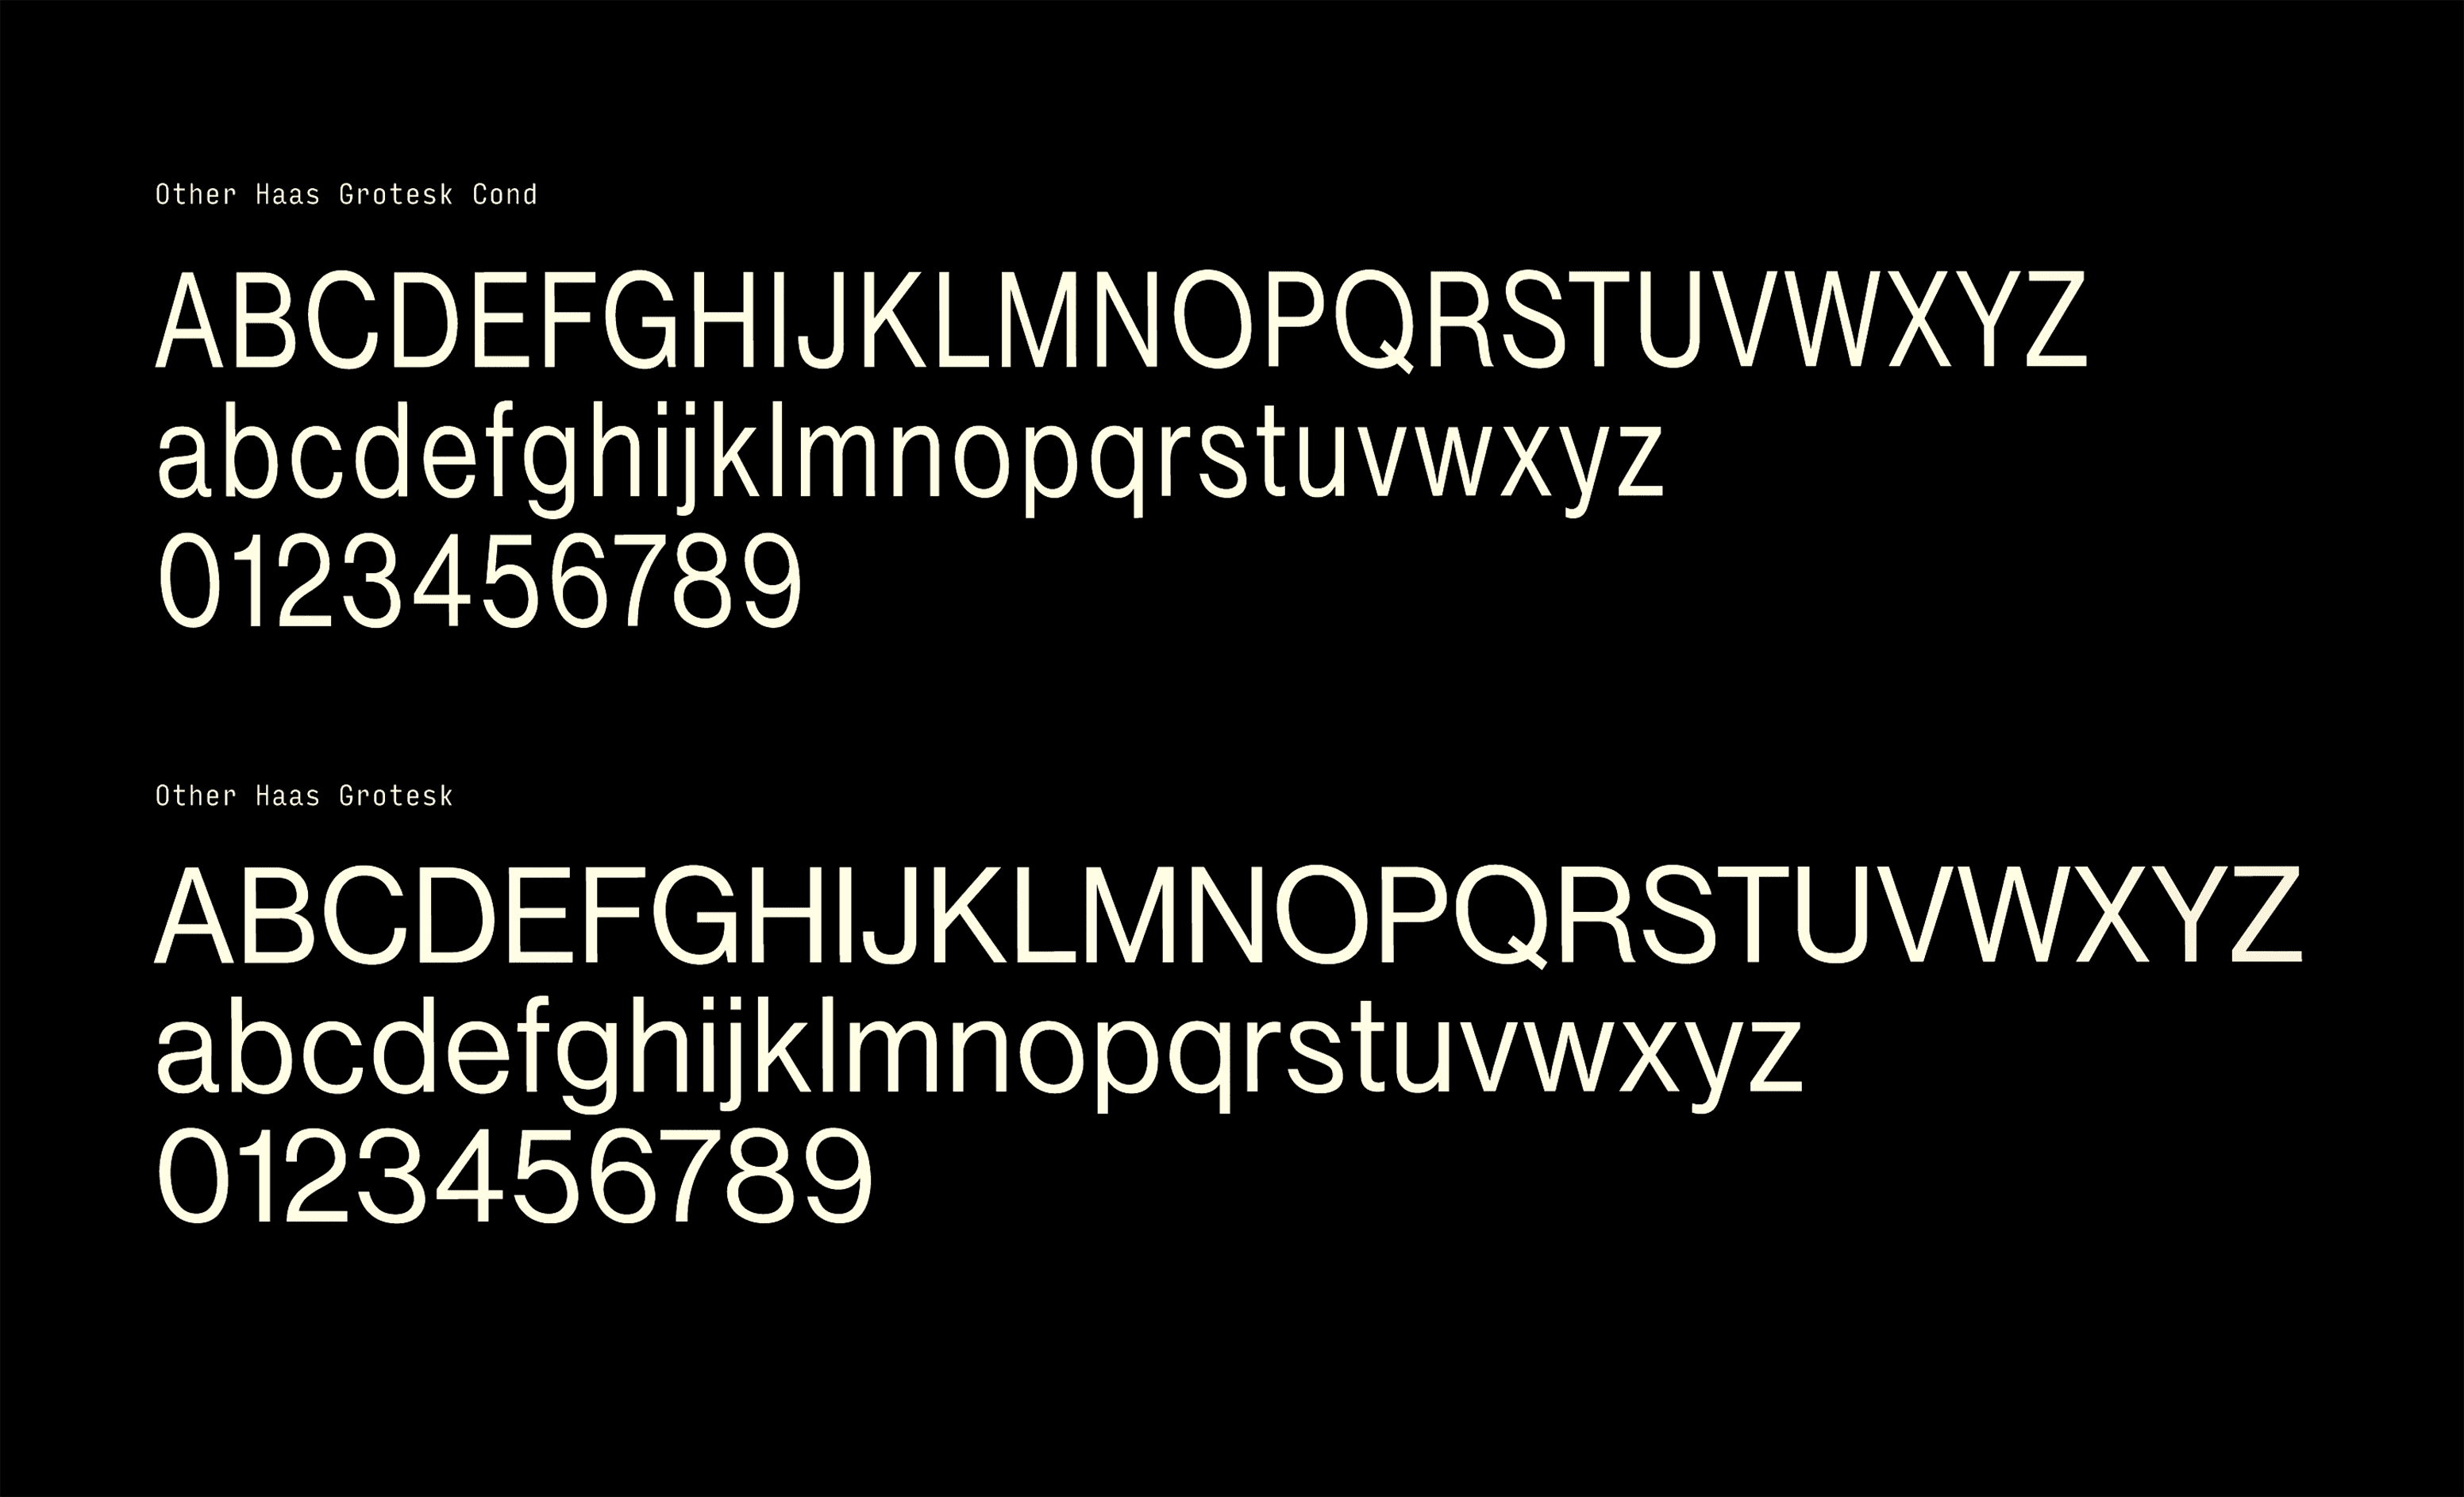 Typography Image